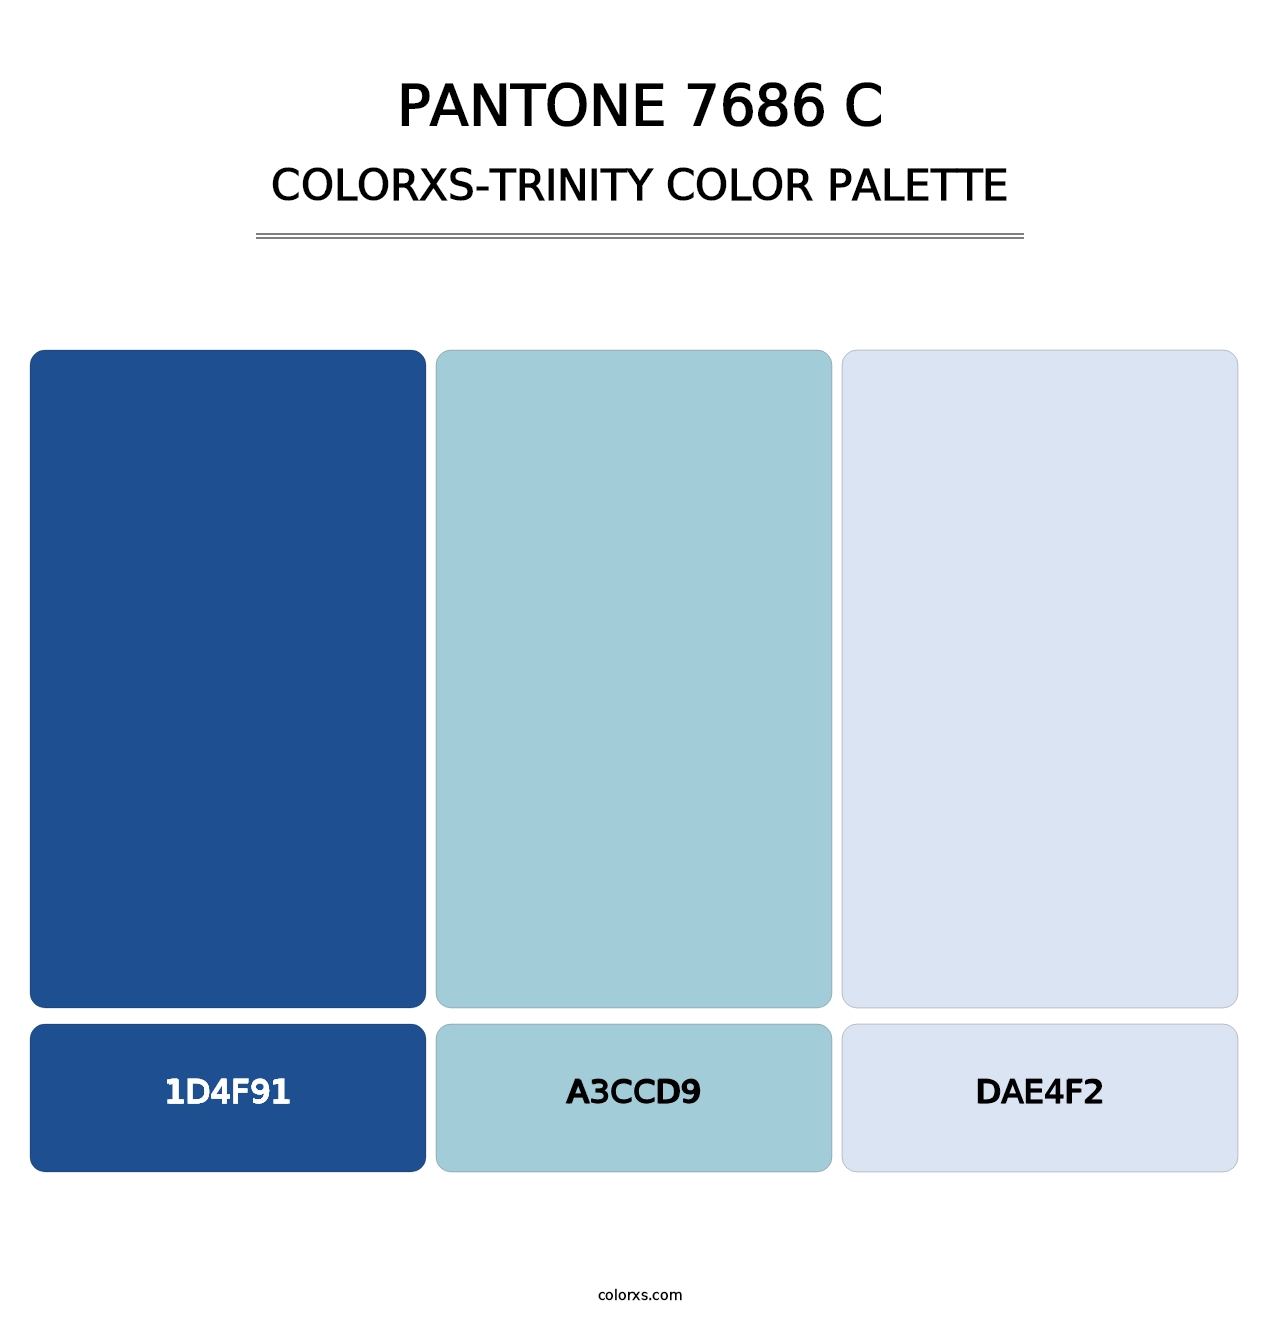 PANTONE 7686 C - Colorxs Trinity Palette